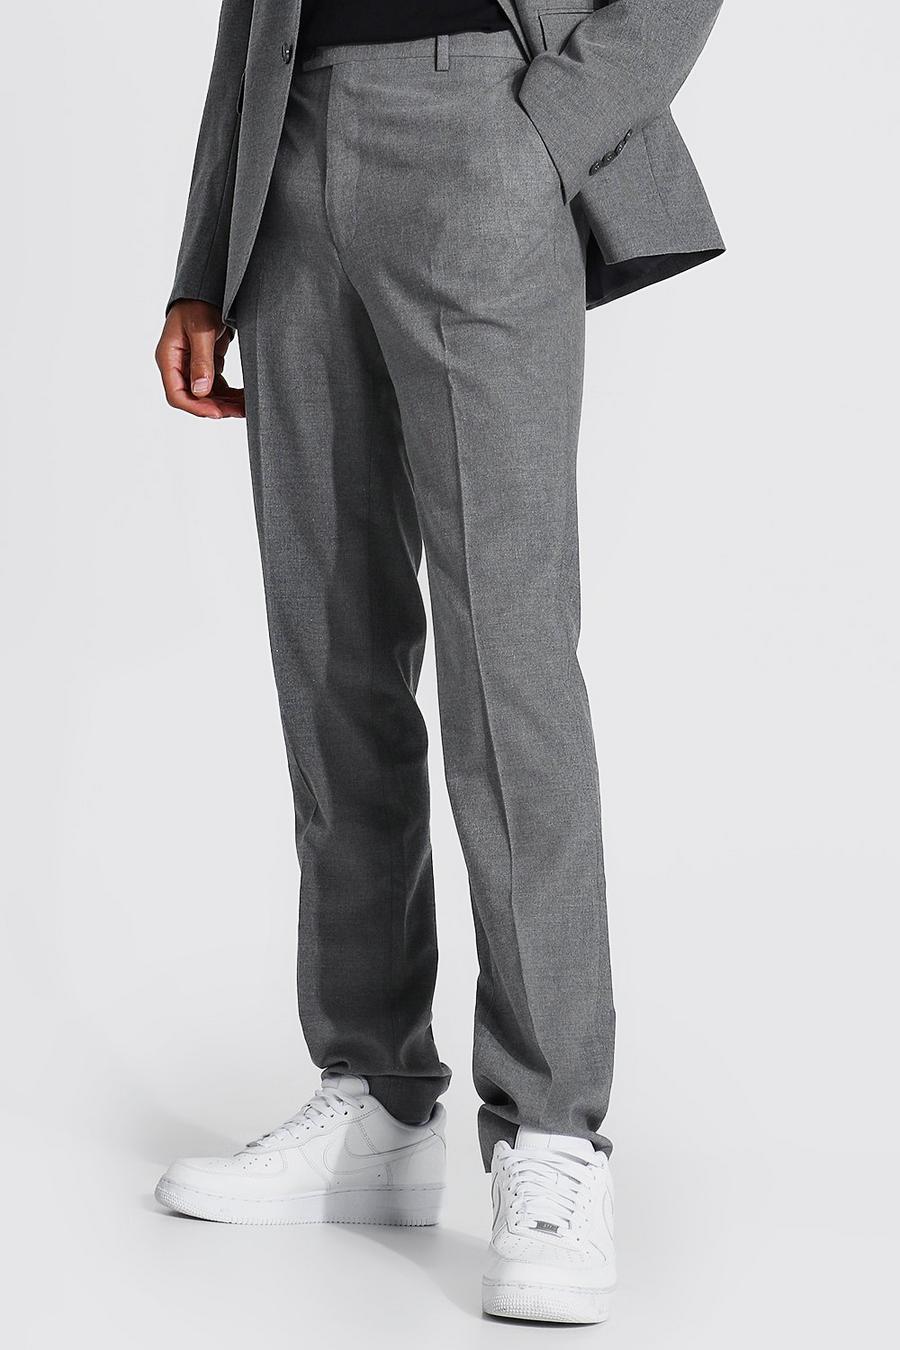 Grey Tall Slim Fit Pants image number 1